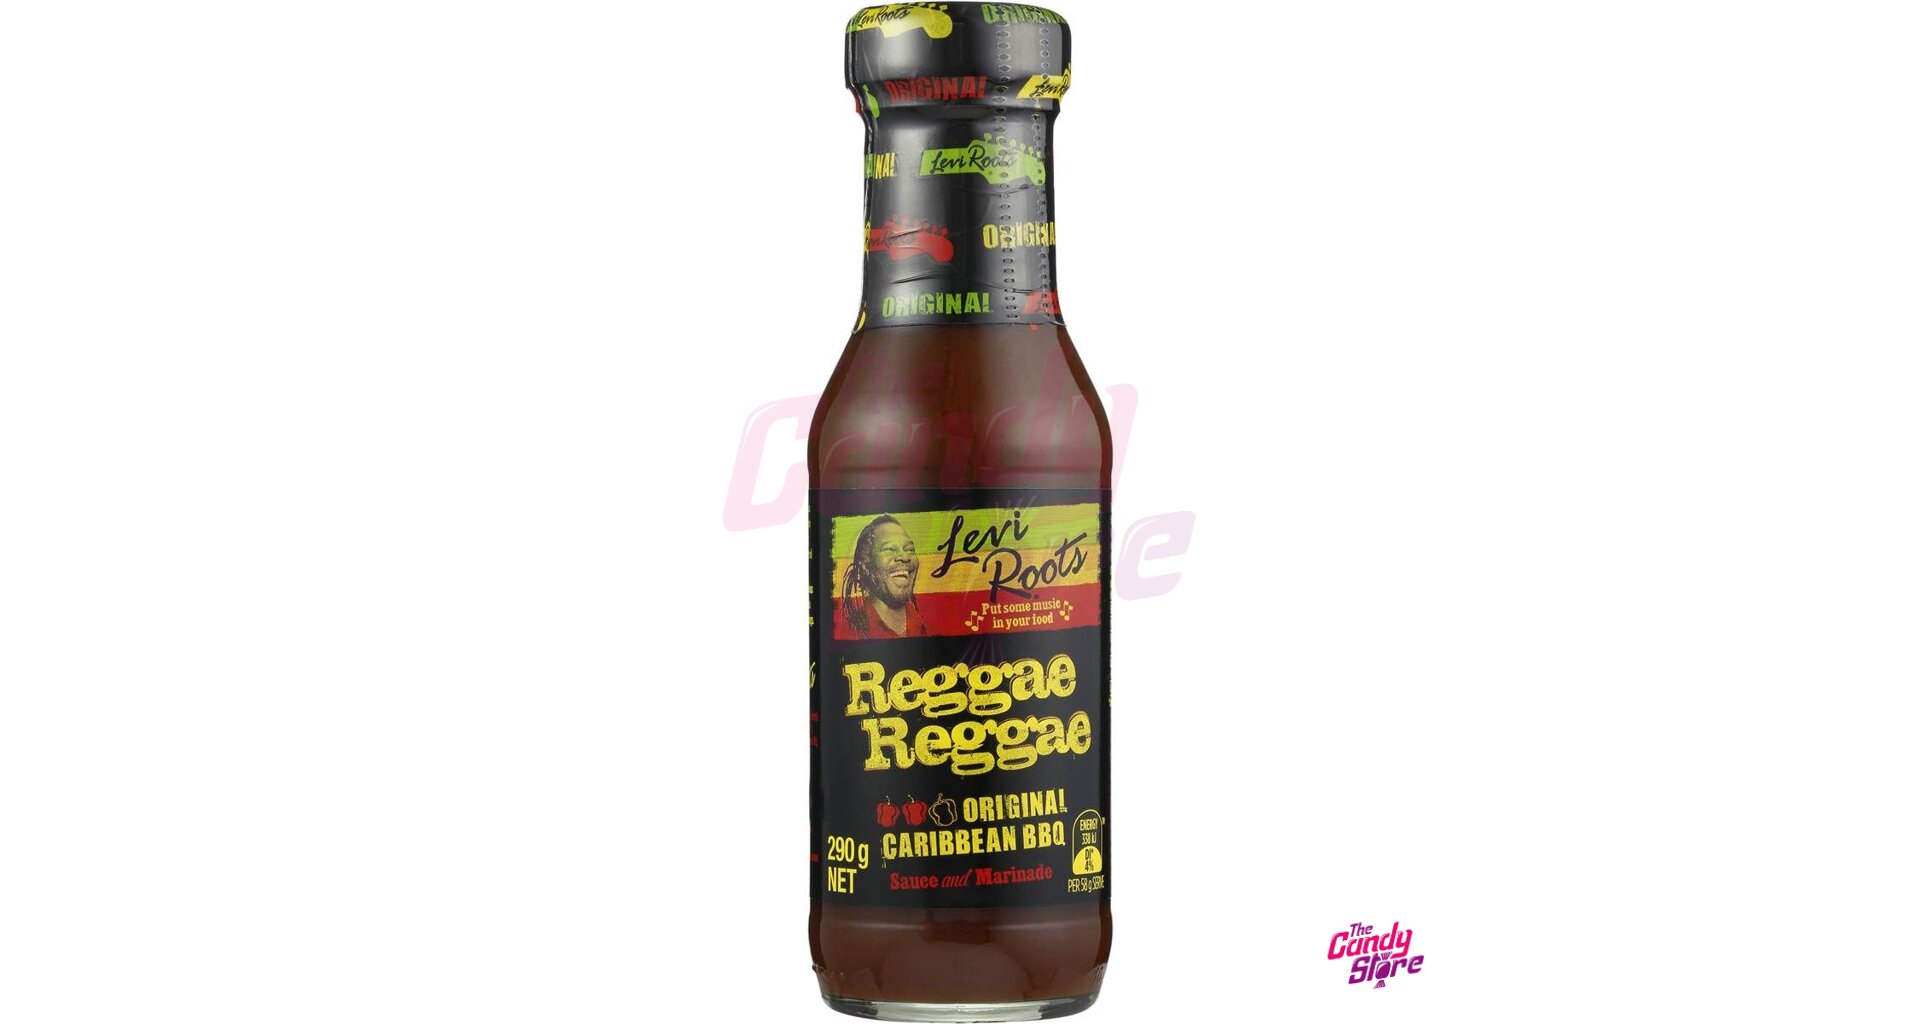 Levi Roots Reggae Reggae Original Caribbean BBQ 290 g  |  Dobroty z celého světa